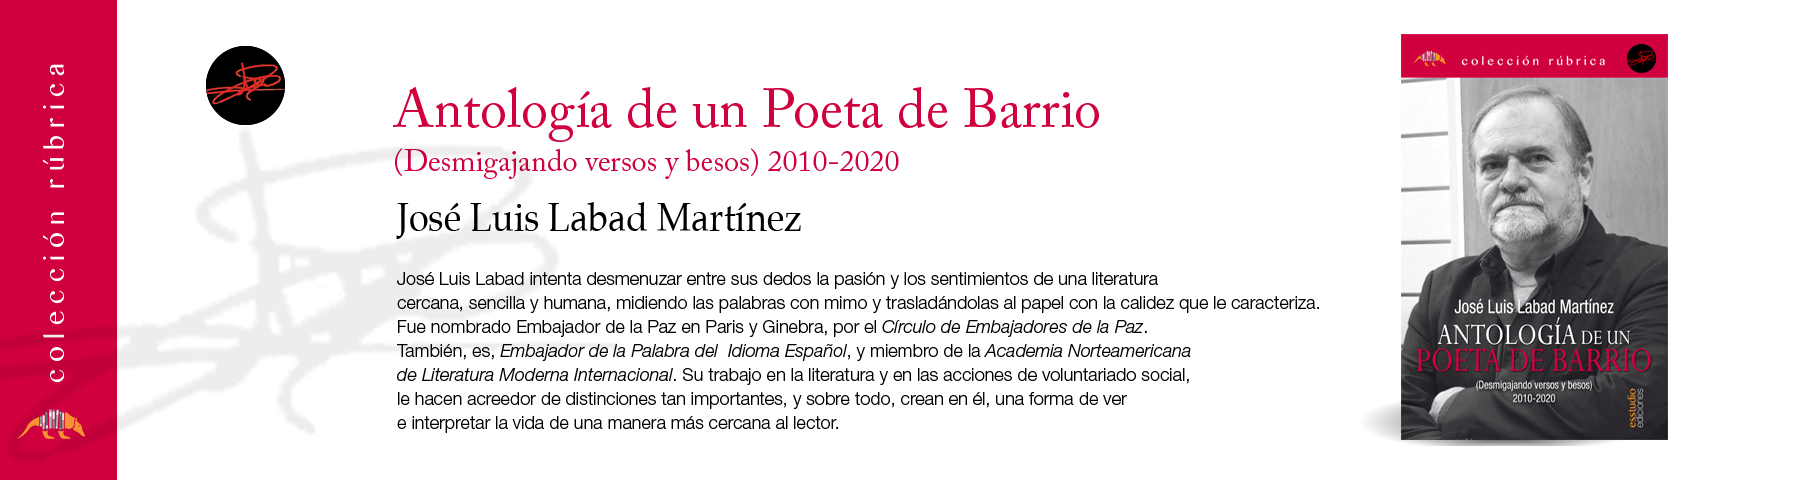 antologia-poeta-de-barrio-esstudio-ediciones